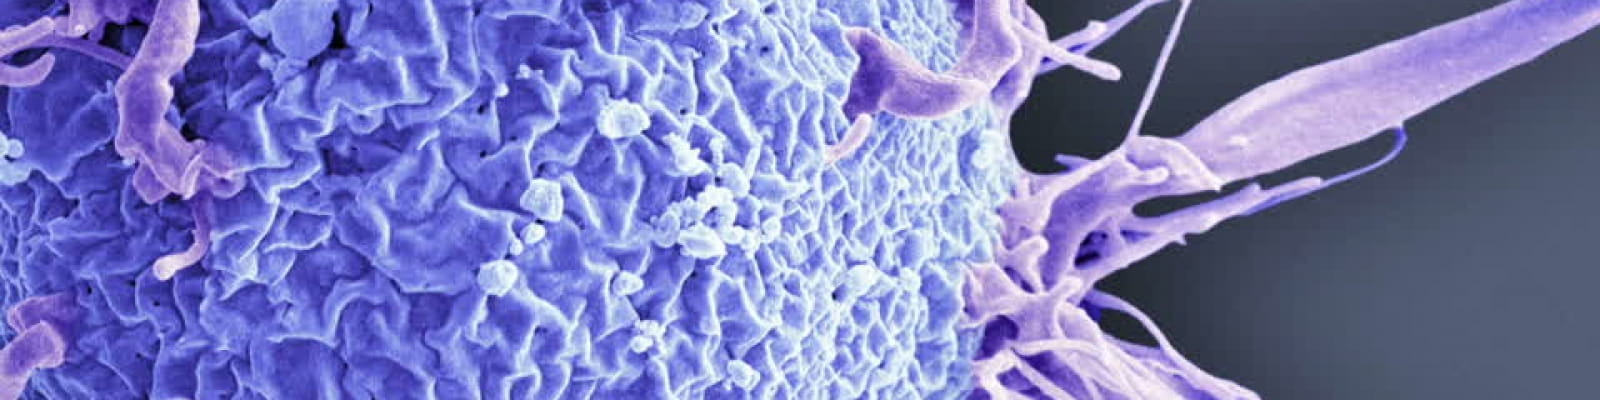 cancer cellule maligne phylum platyhelminthes clasa turbellaria